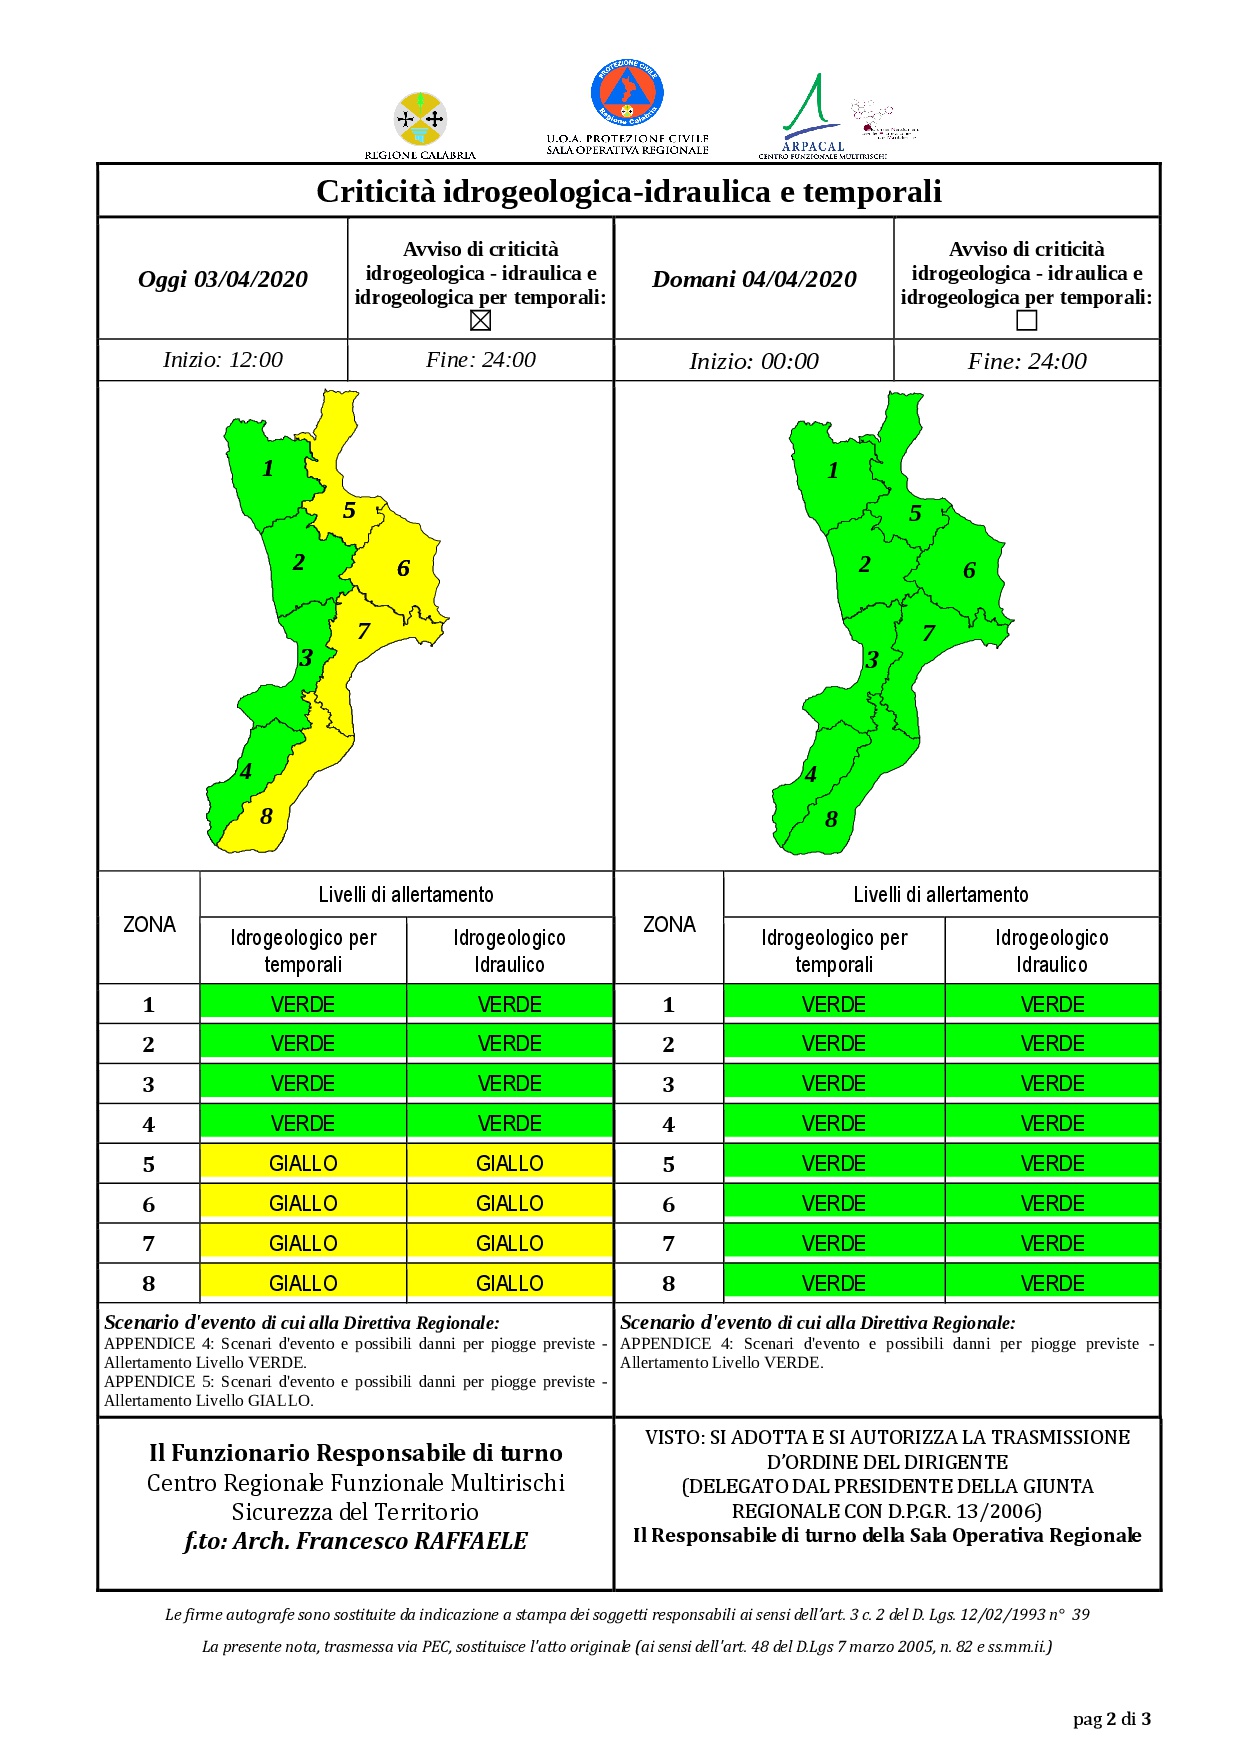 Criticità idrogeologica-idraulica e temporali in Calabria 03-04-2020